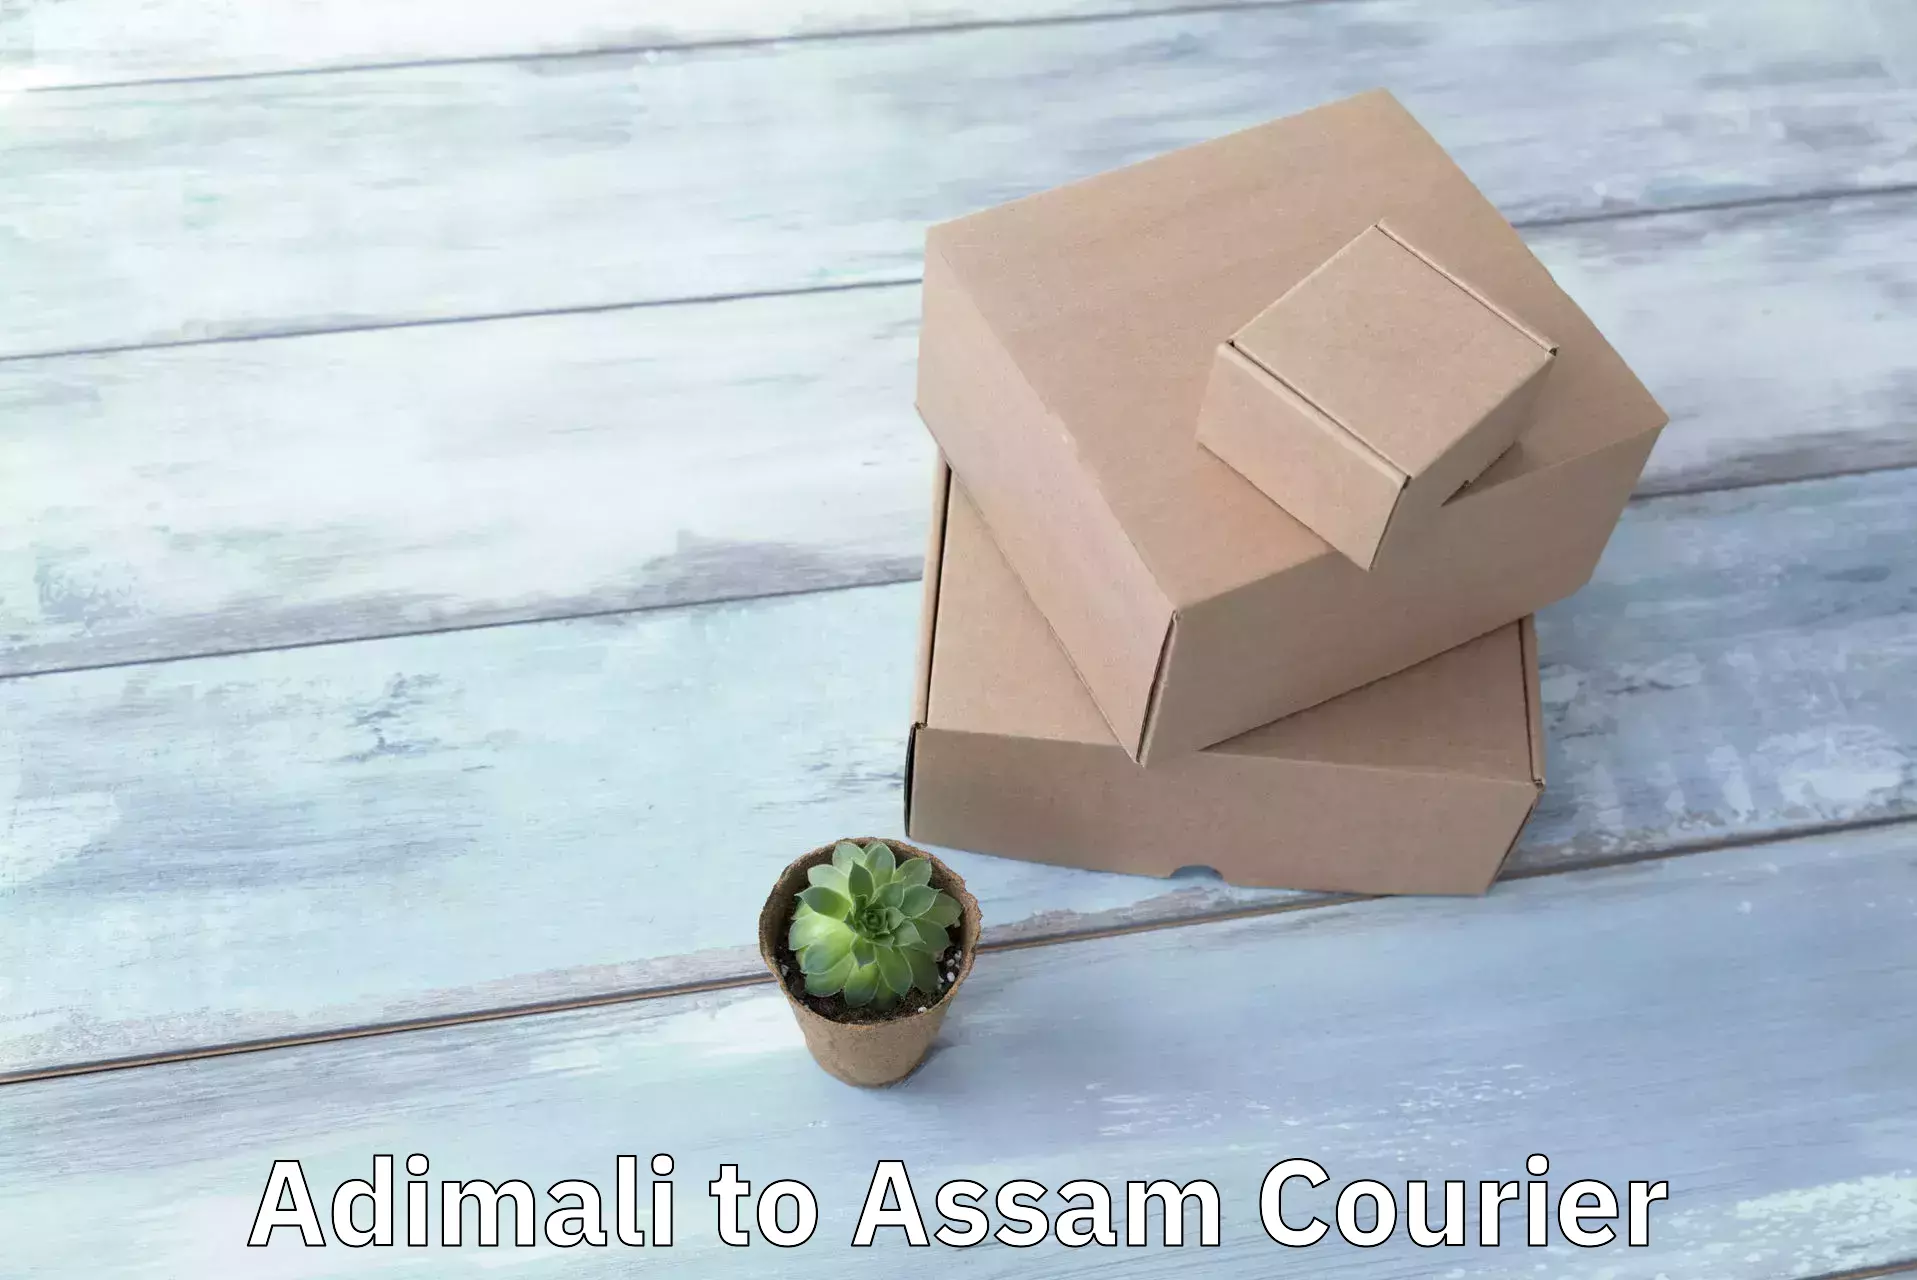 Advanced tracking systems Adimali to Assam